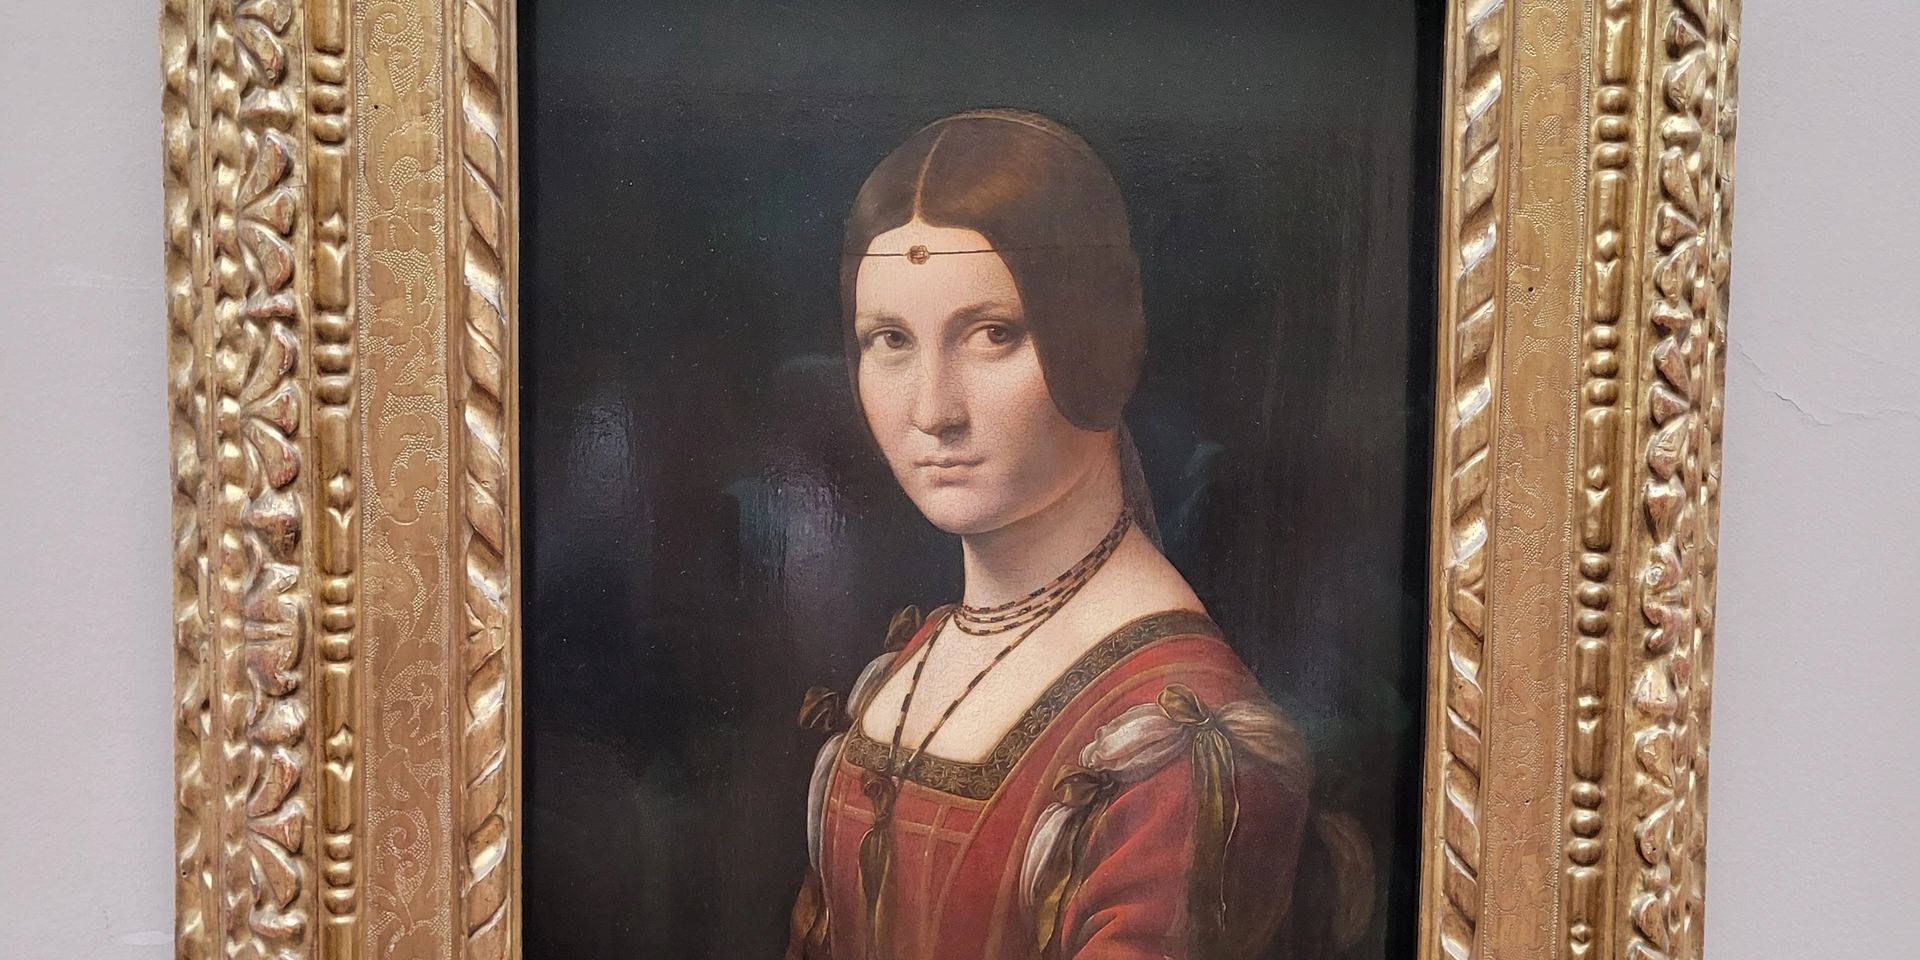 Famous Woman portrait of la belle ferronière by Da Vinci in the Louvre